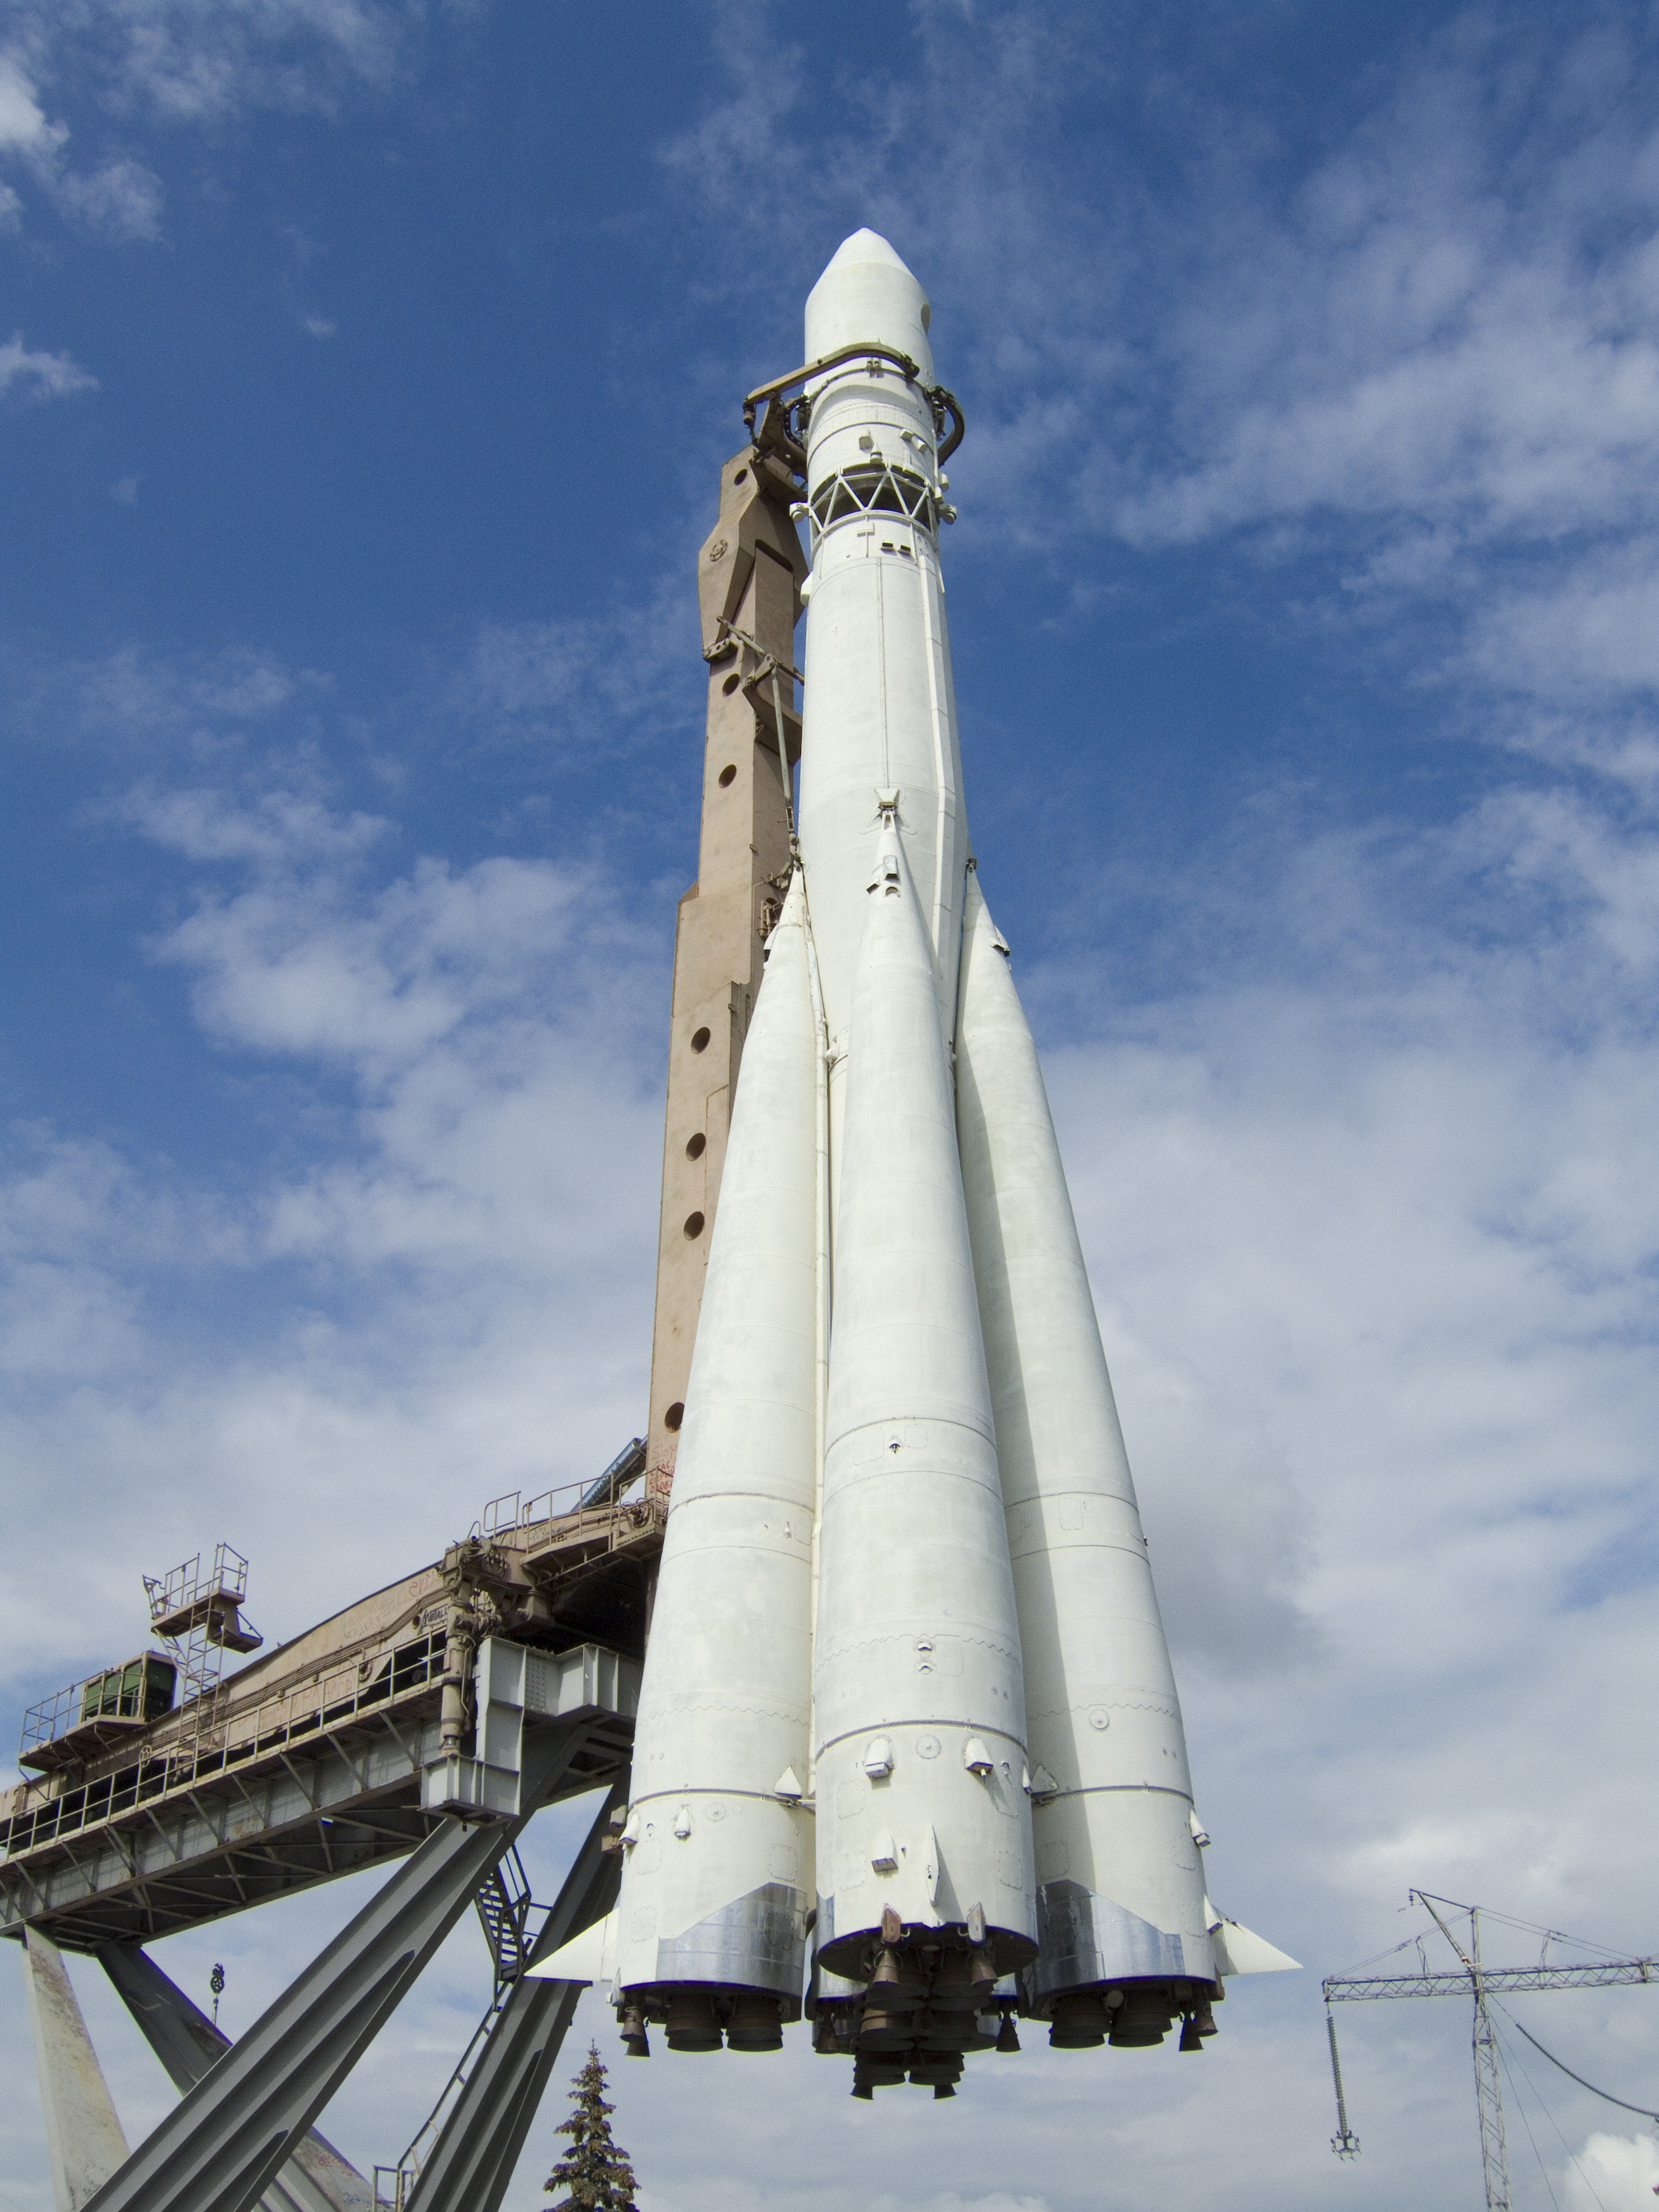 Semyorka Rocket R7 by Sergei Korolyov in VDNH Ostankino RAF0540